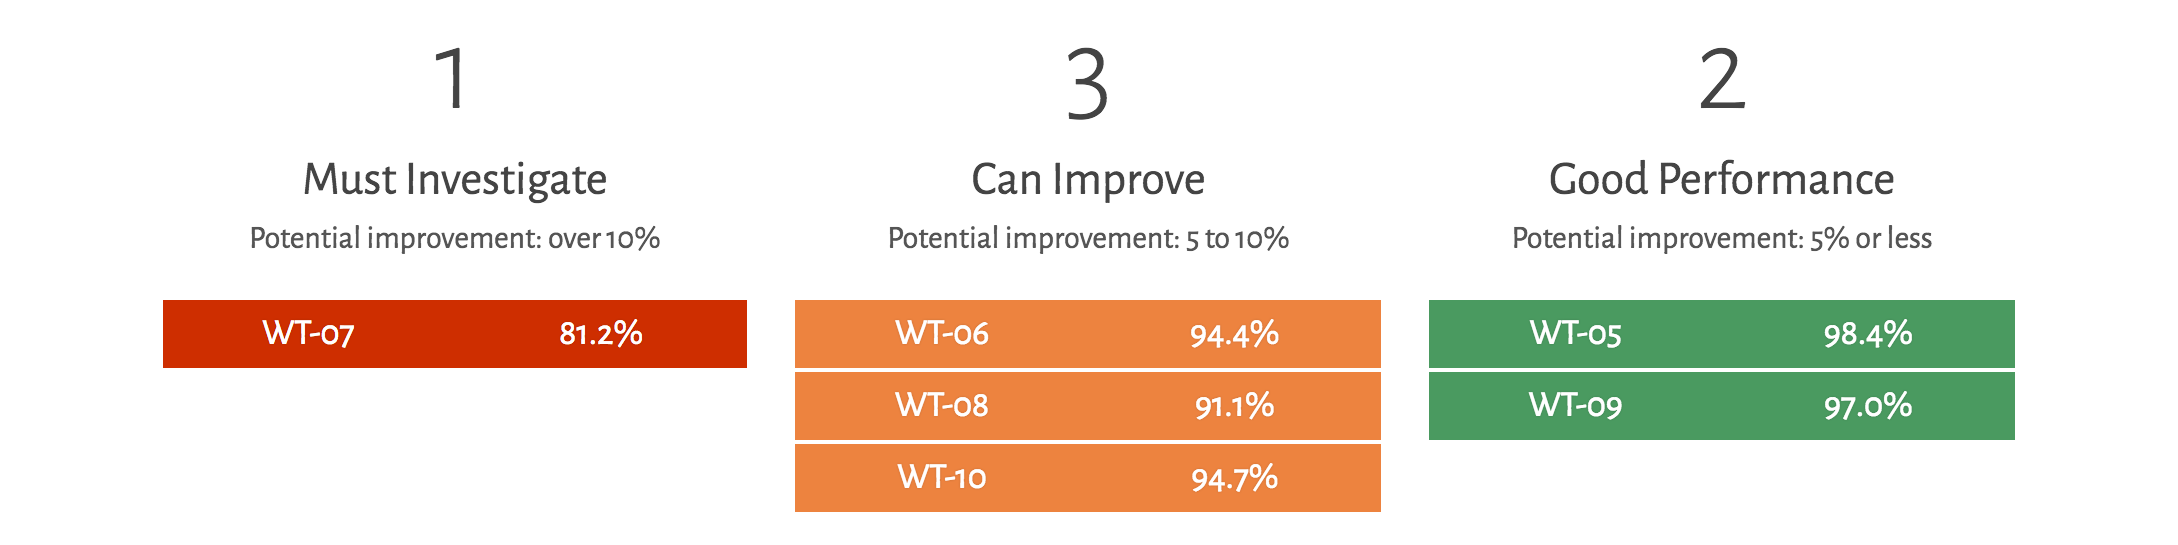 Performance Index Comparison